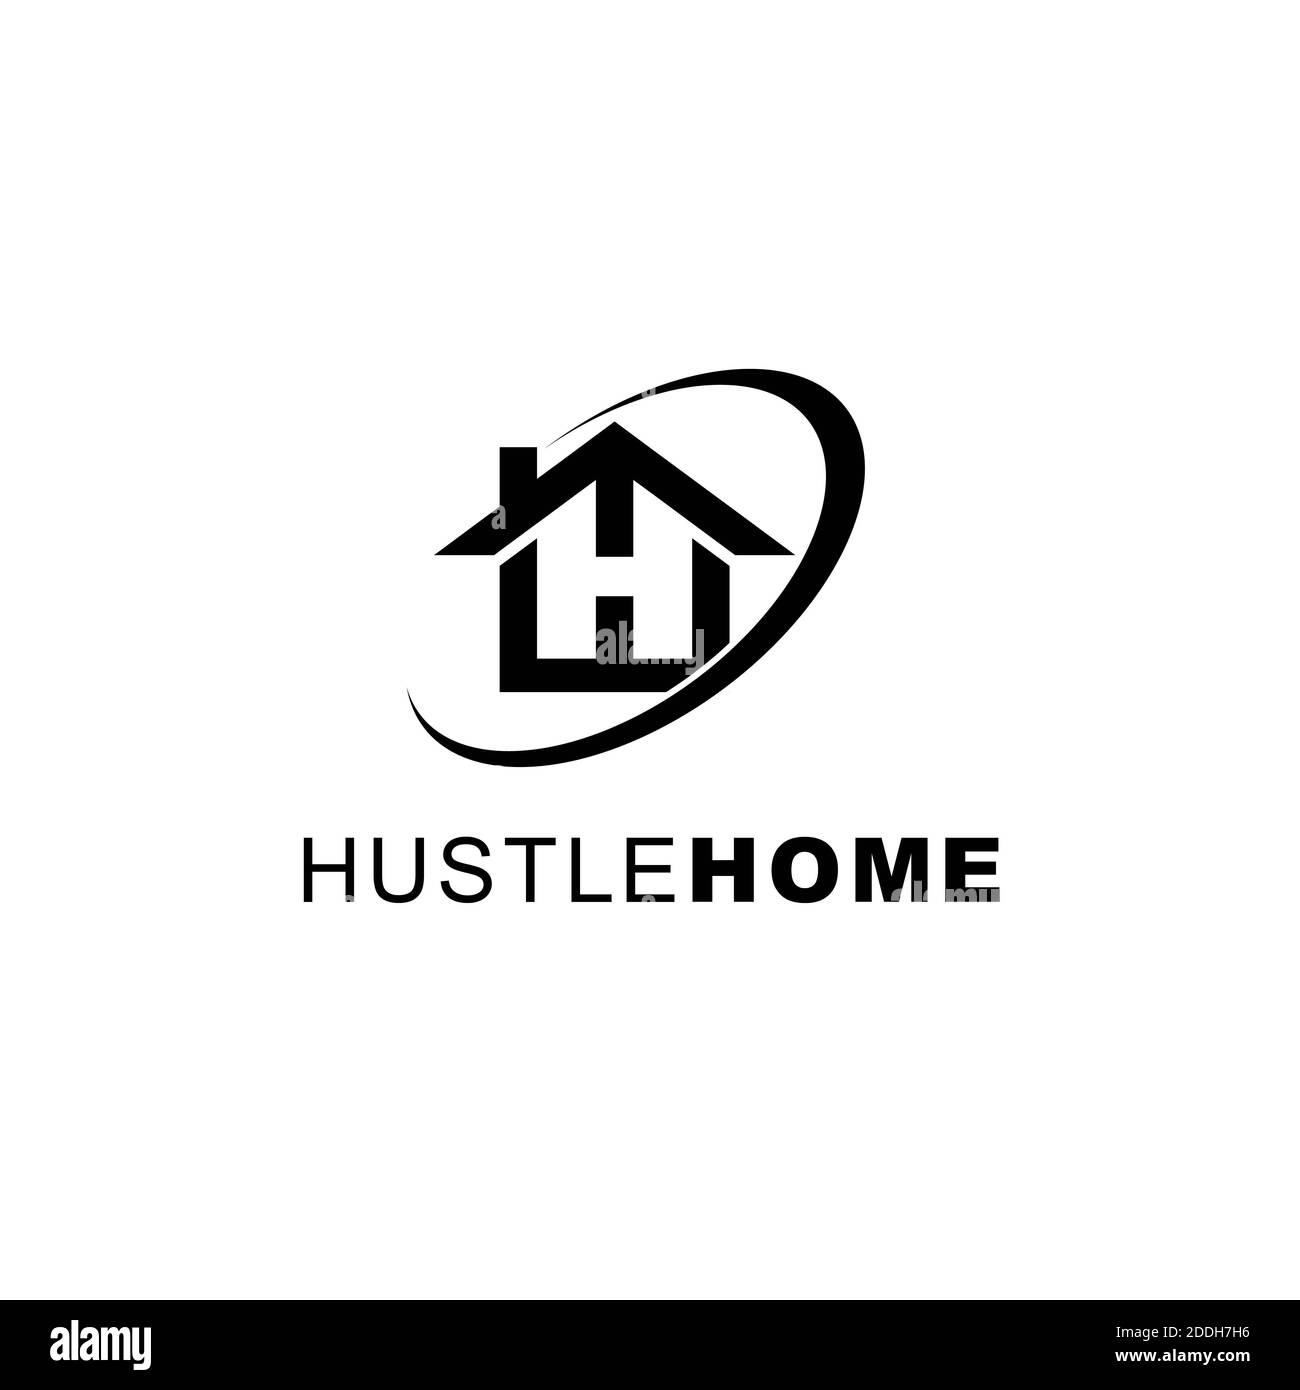 symbol logo illustration design hustle home Stock Photo